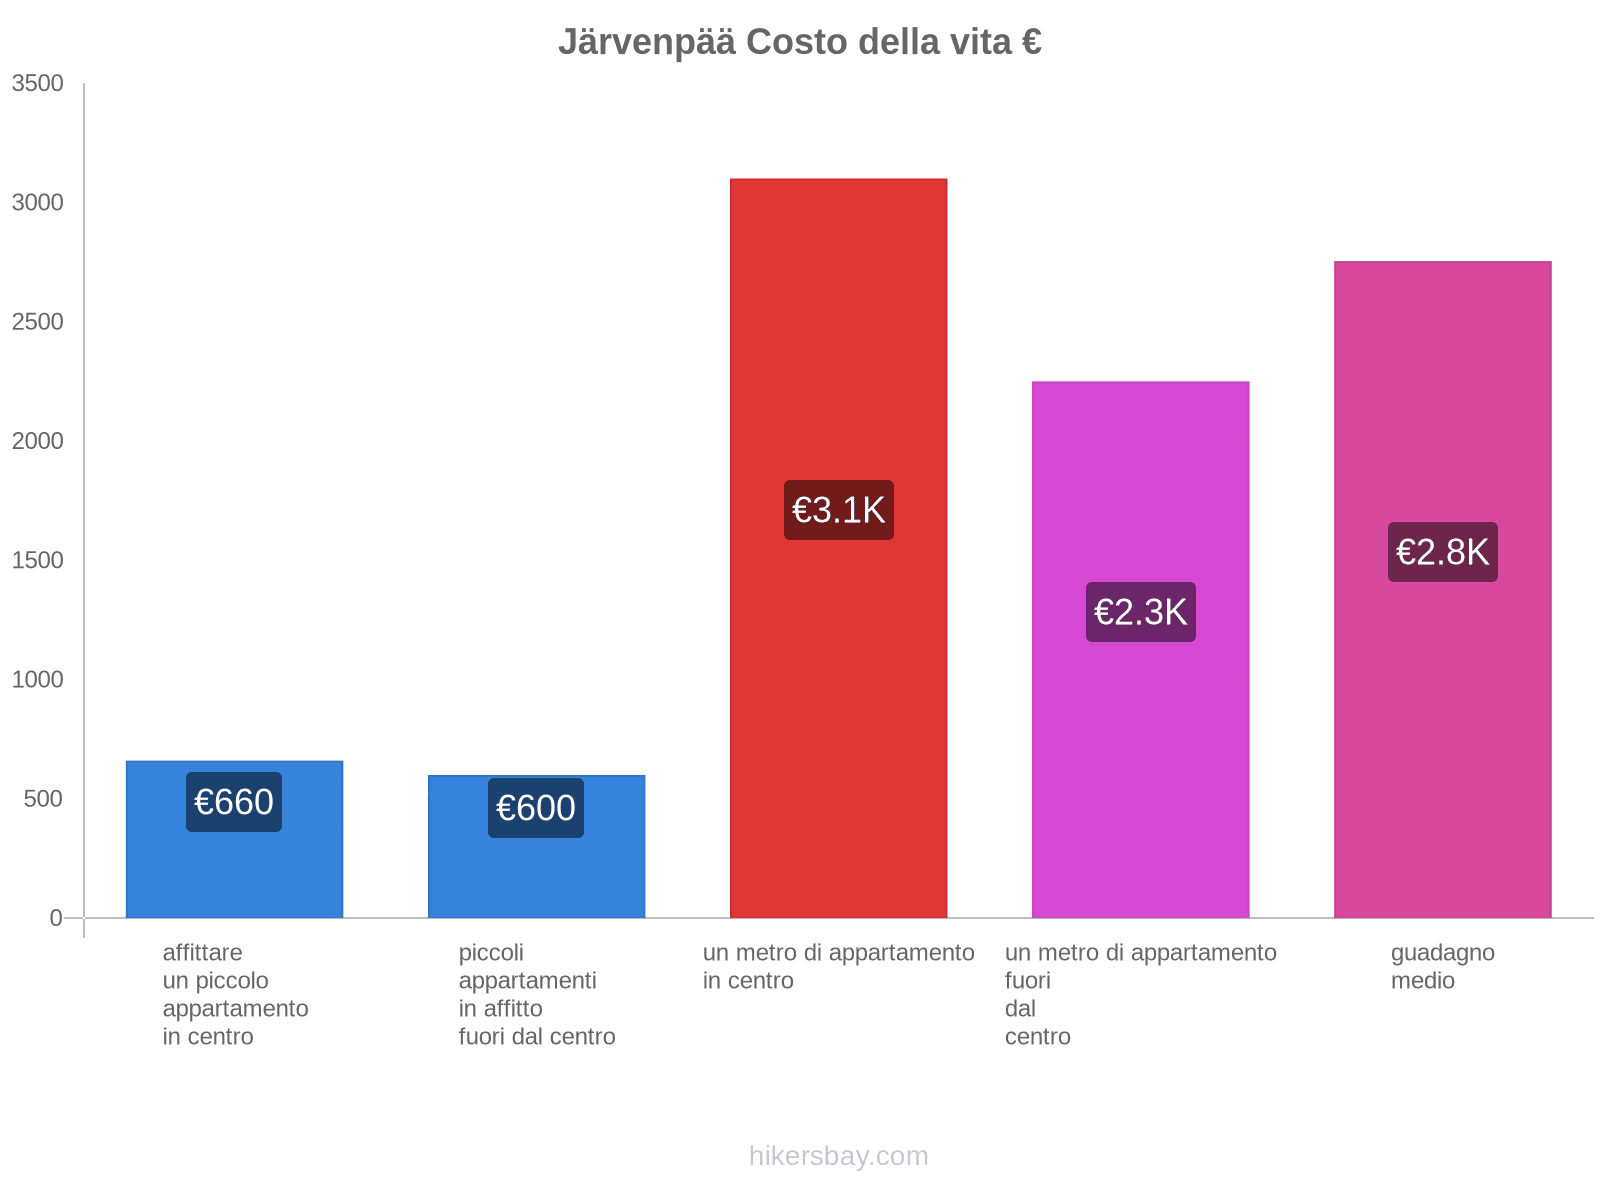 Järvenpää costo della vita hikersbay.com